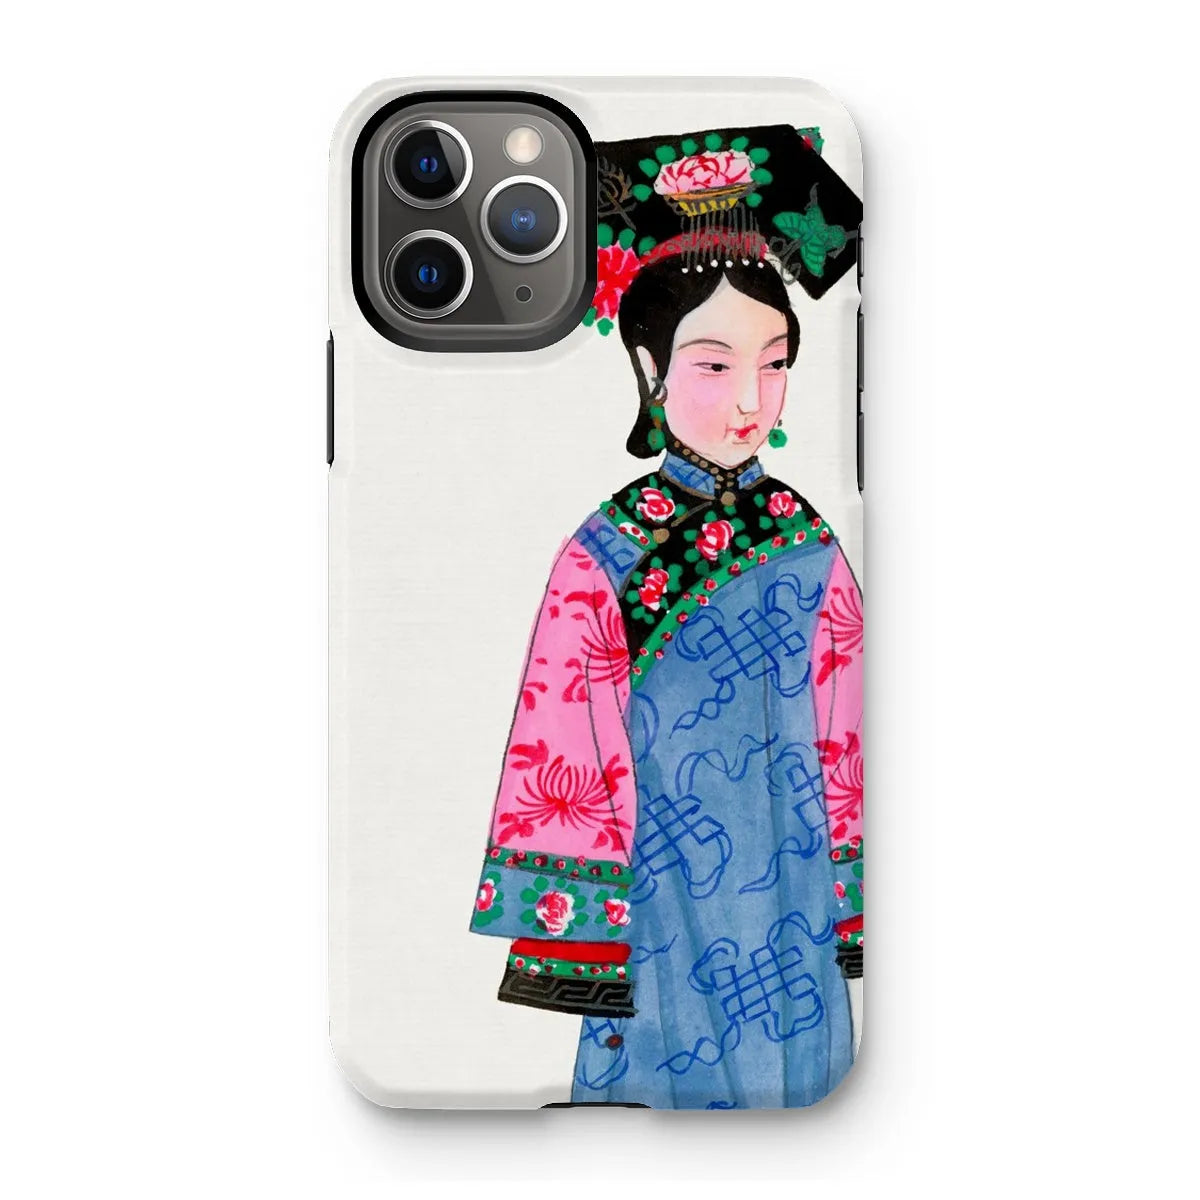 Noblewoman Too - Manchu Aesthetic Art Phone Case - Iphone 11 Pro / Matte - Mobile Phone Cases - Aesthetic Art